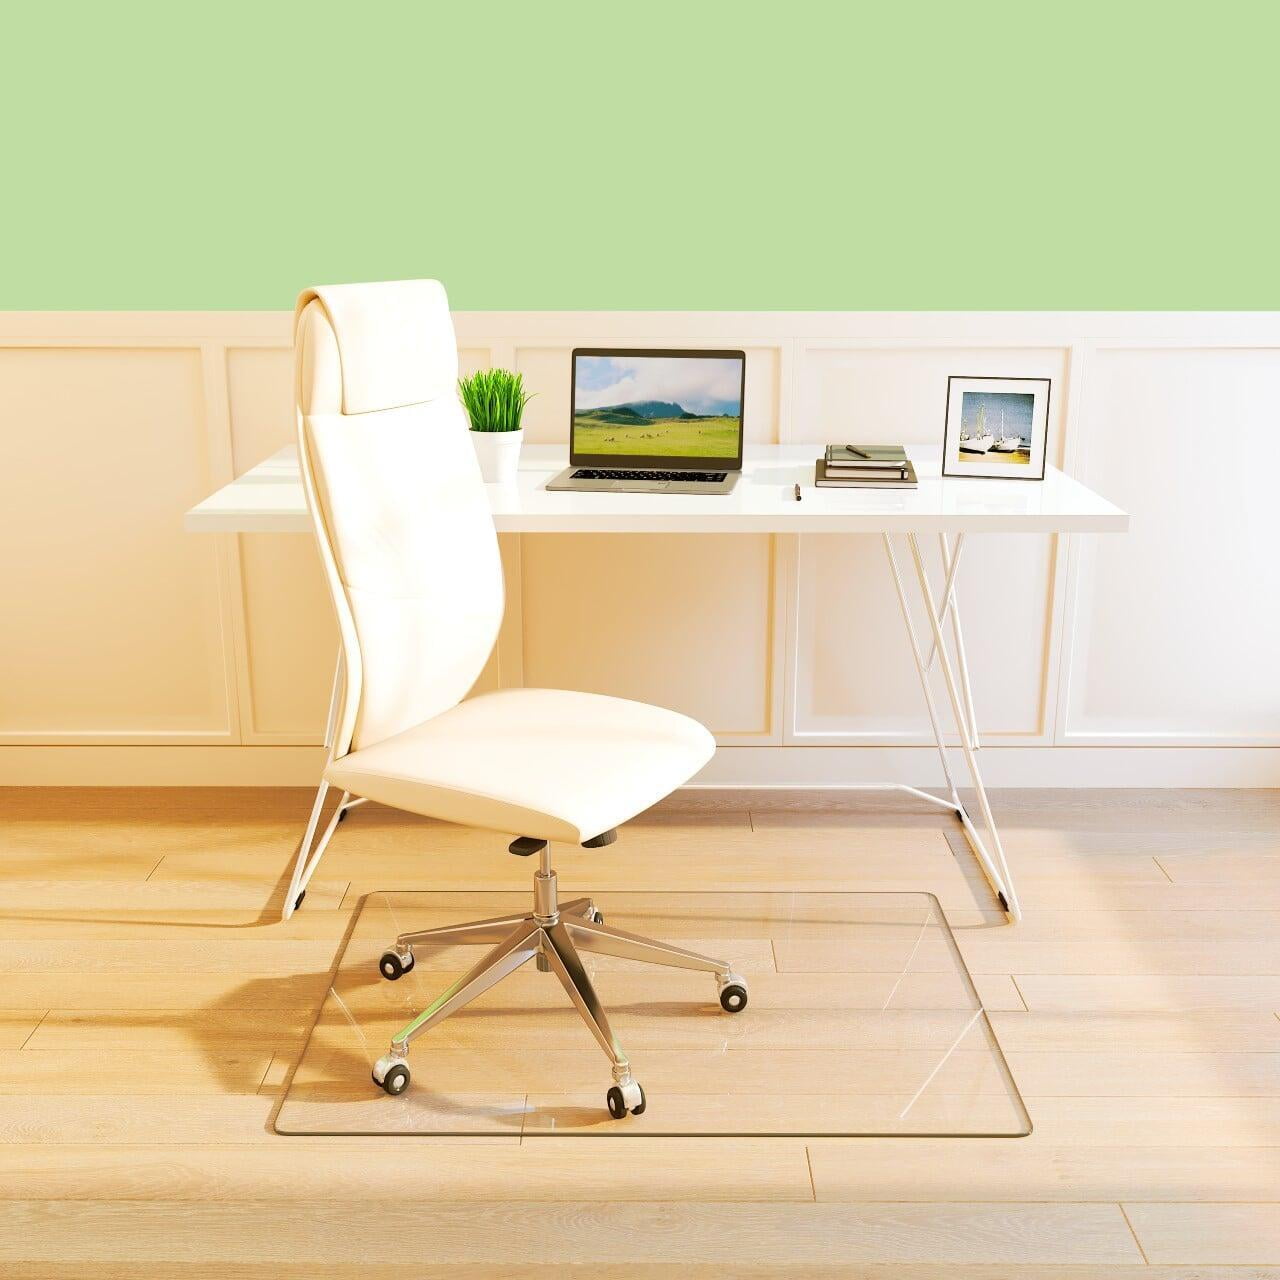 Glass chair mat for carpet and hardwood floor